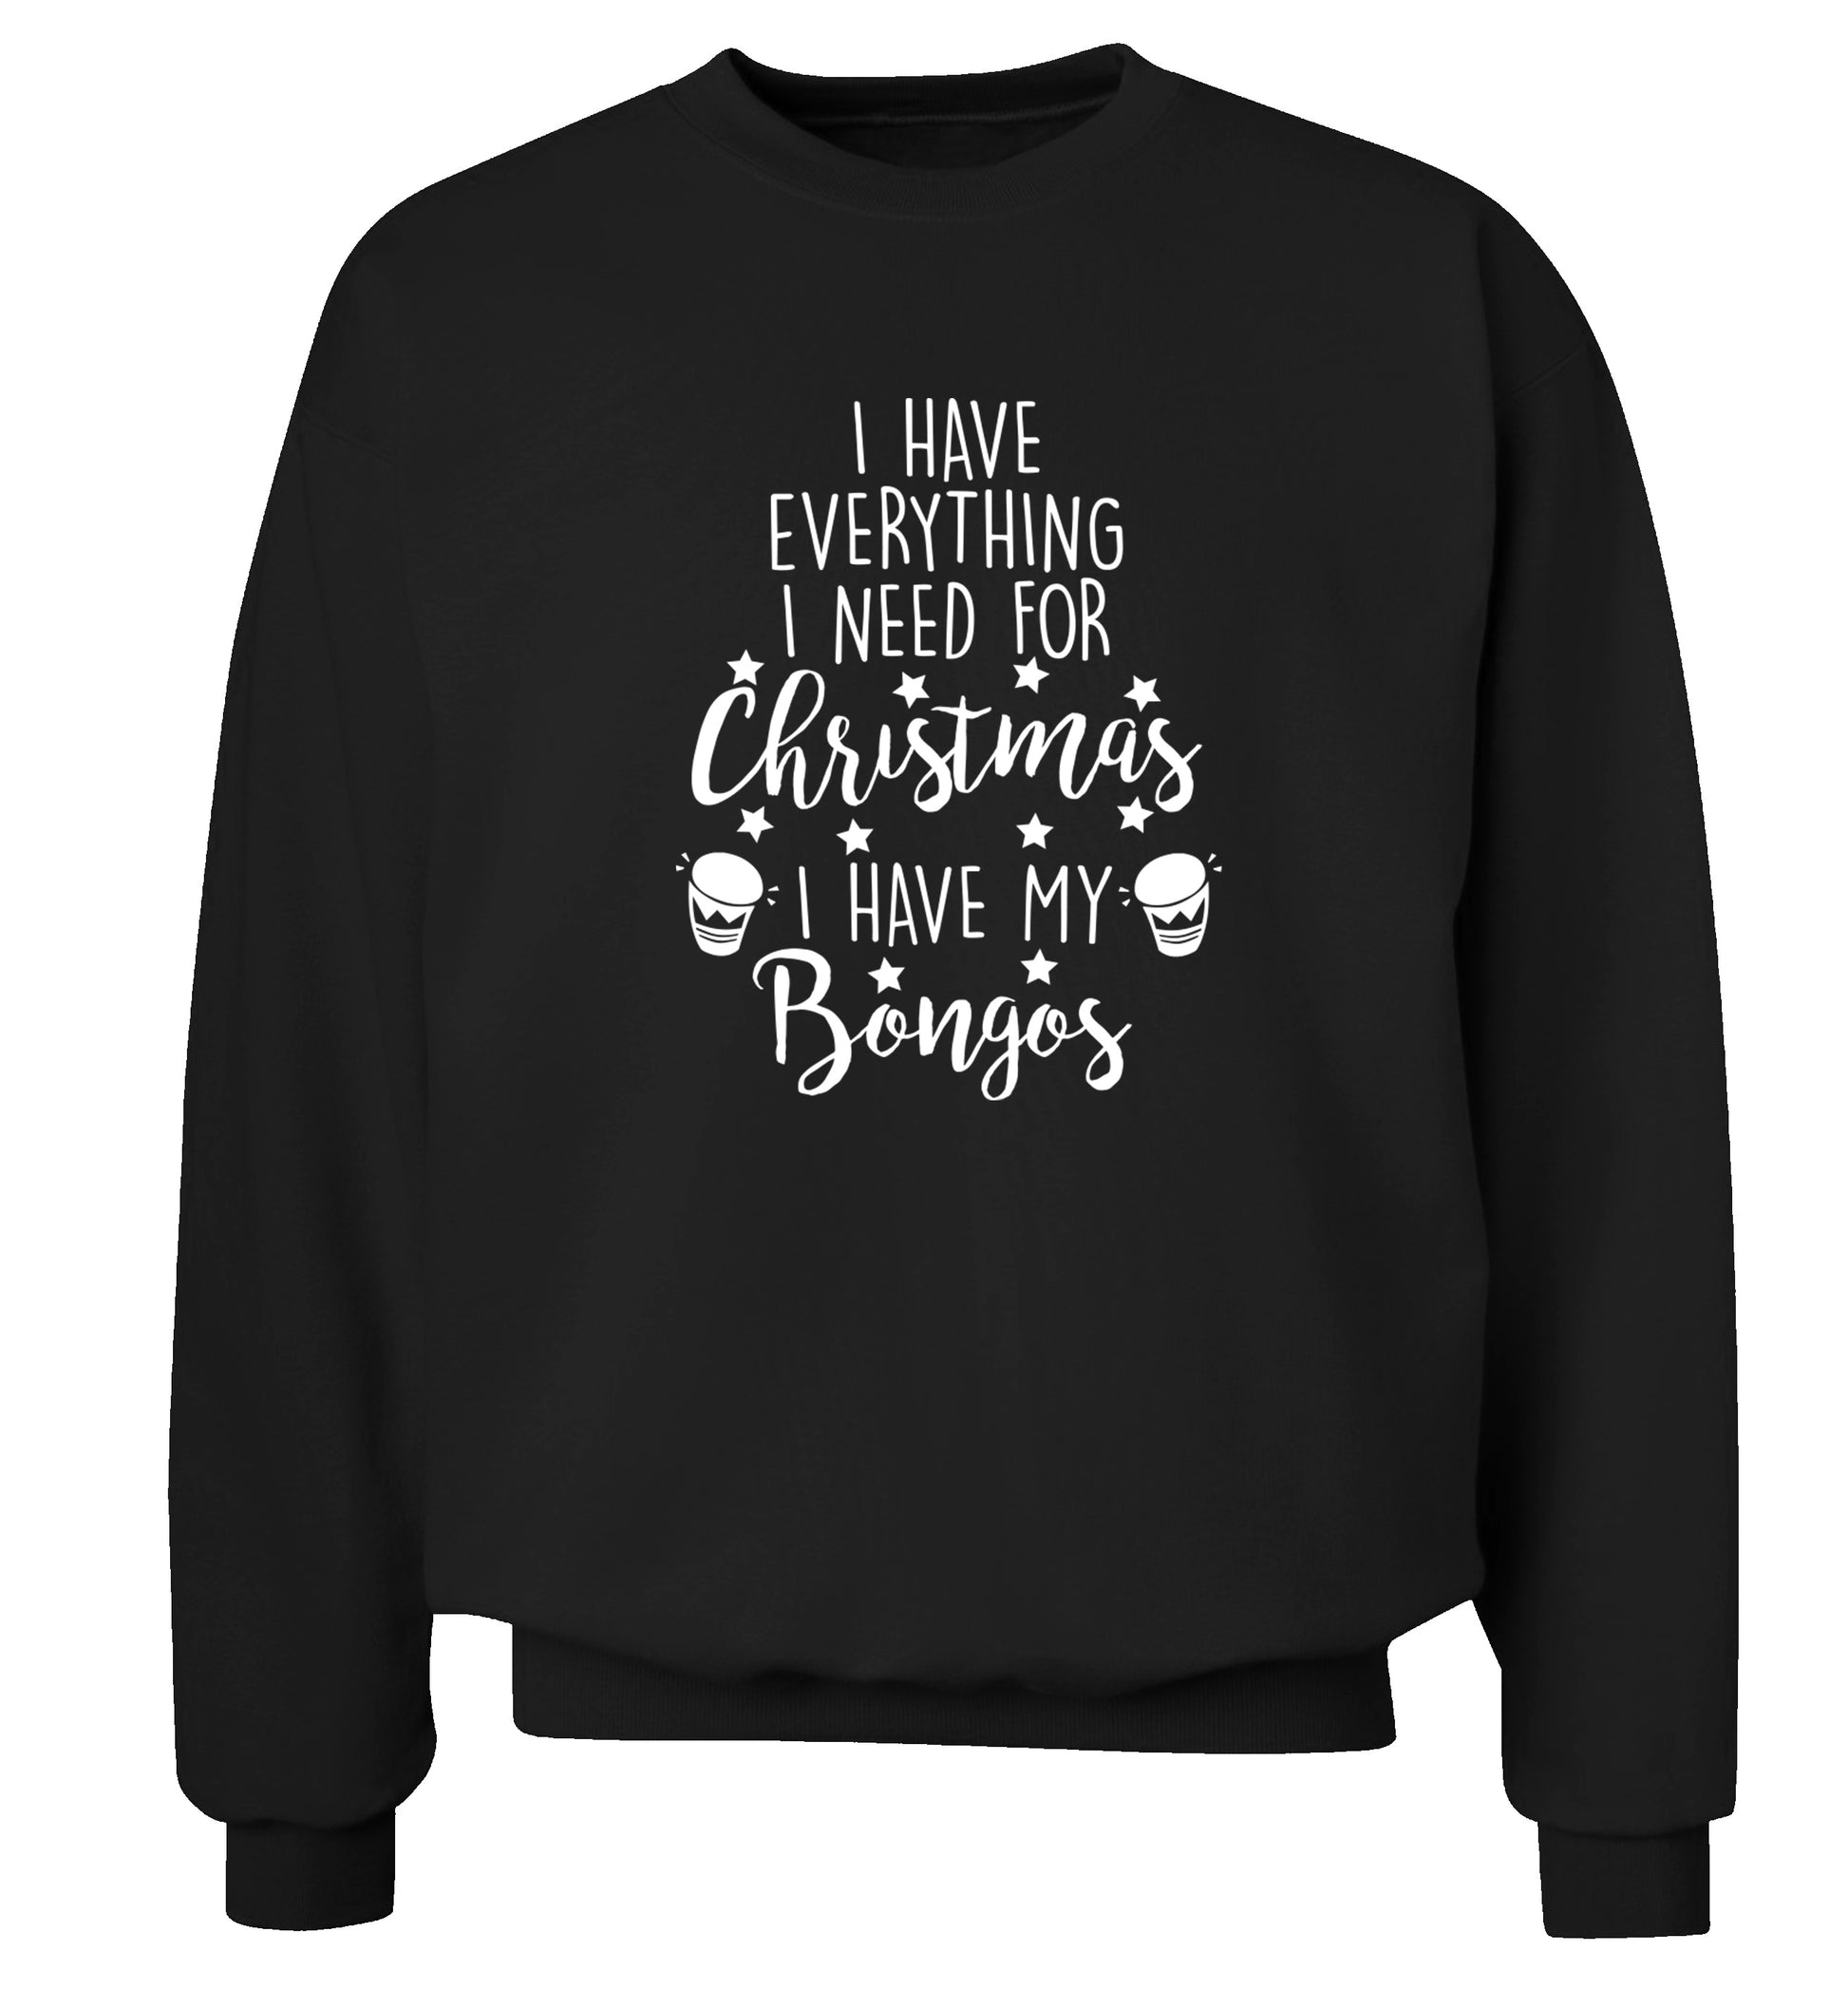 I have everything I need for Christmas I have my bongos! Adult's unisex black Sweater 2XL